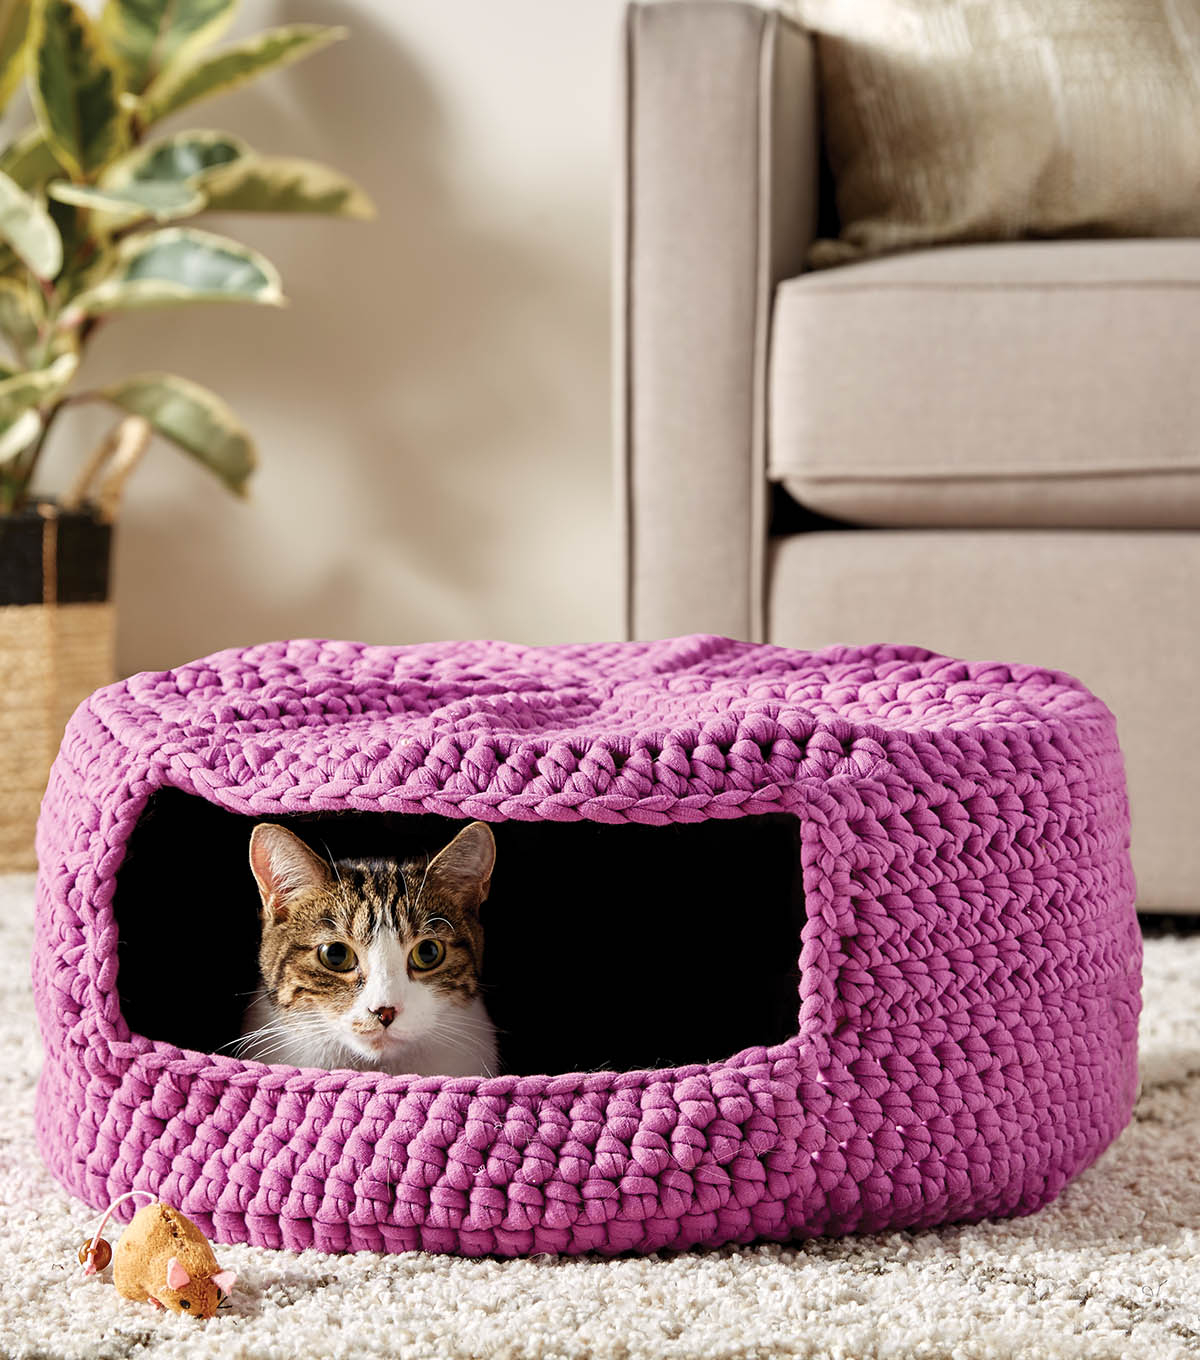 Free Crochet Cat Bed Pattern How To Make A Crochet Cat Bed Joann